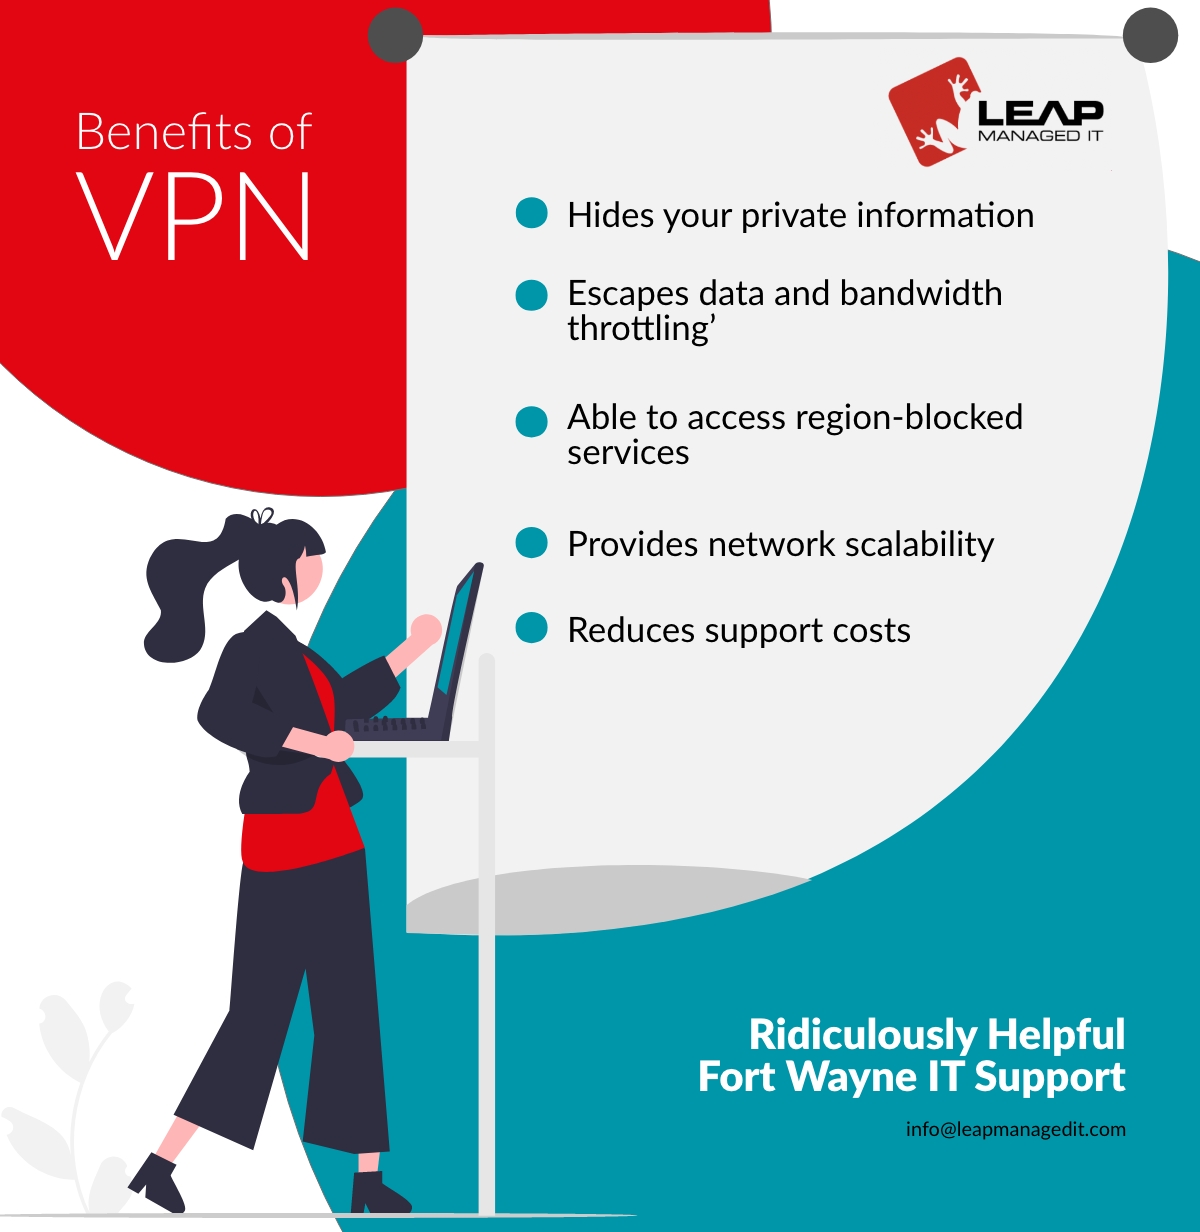 VPN Benefits in Businesses - LeapManagedIT